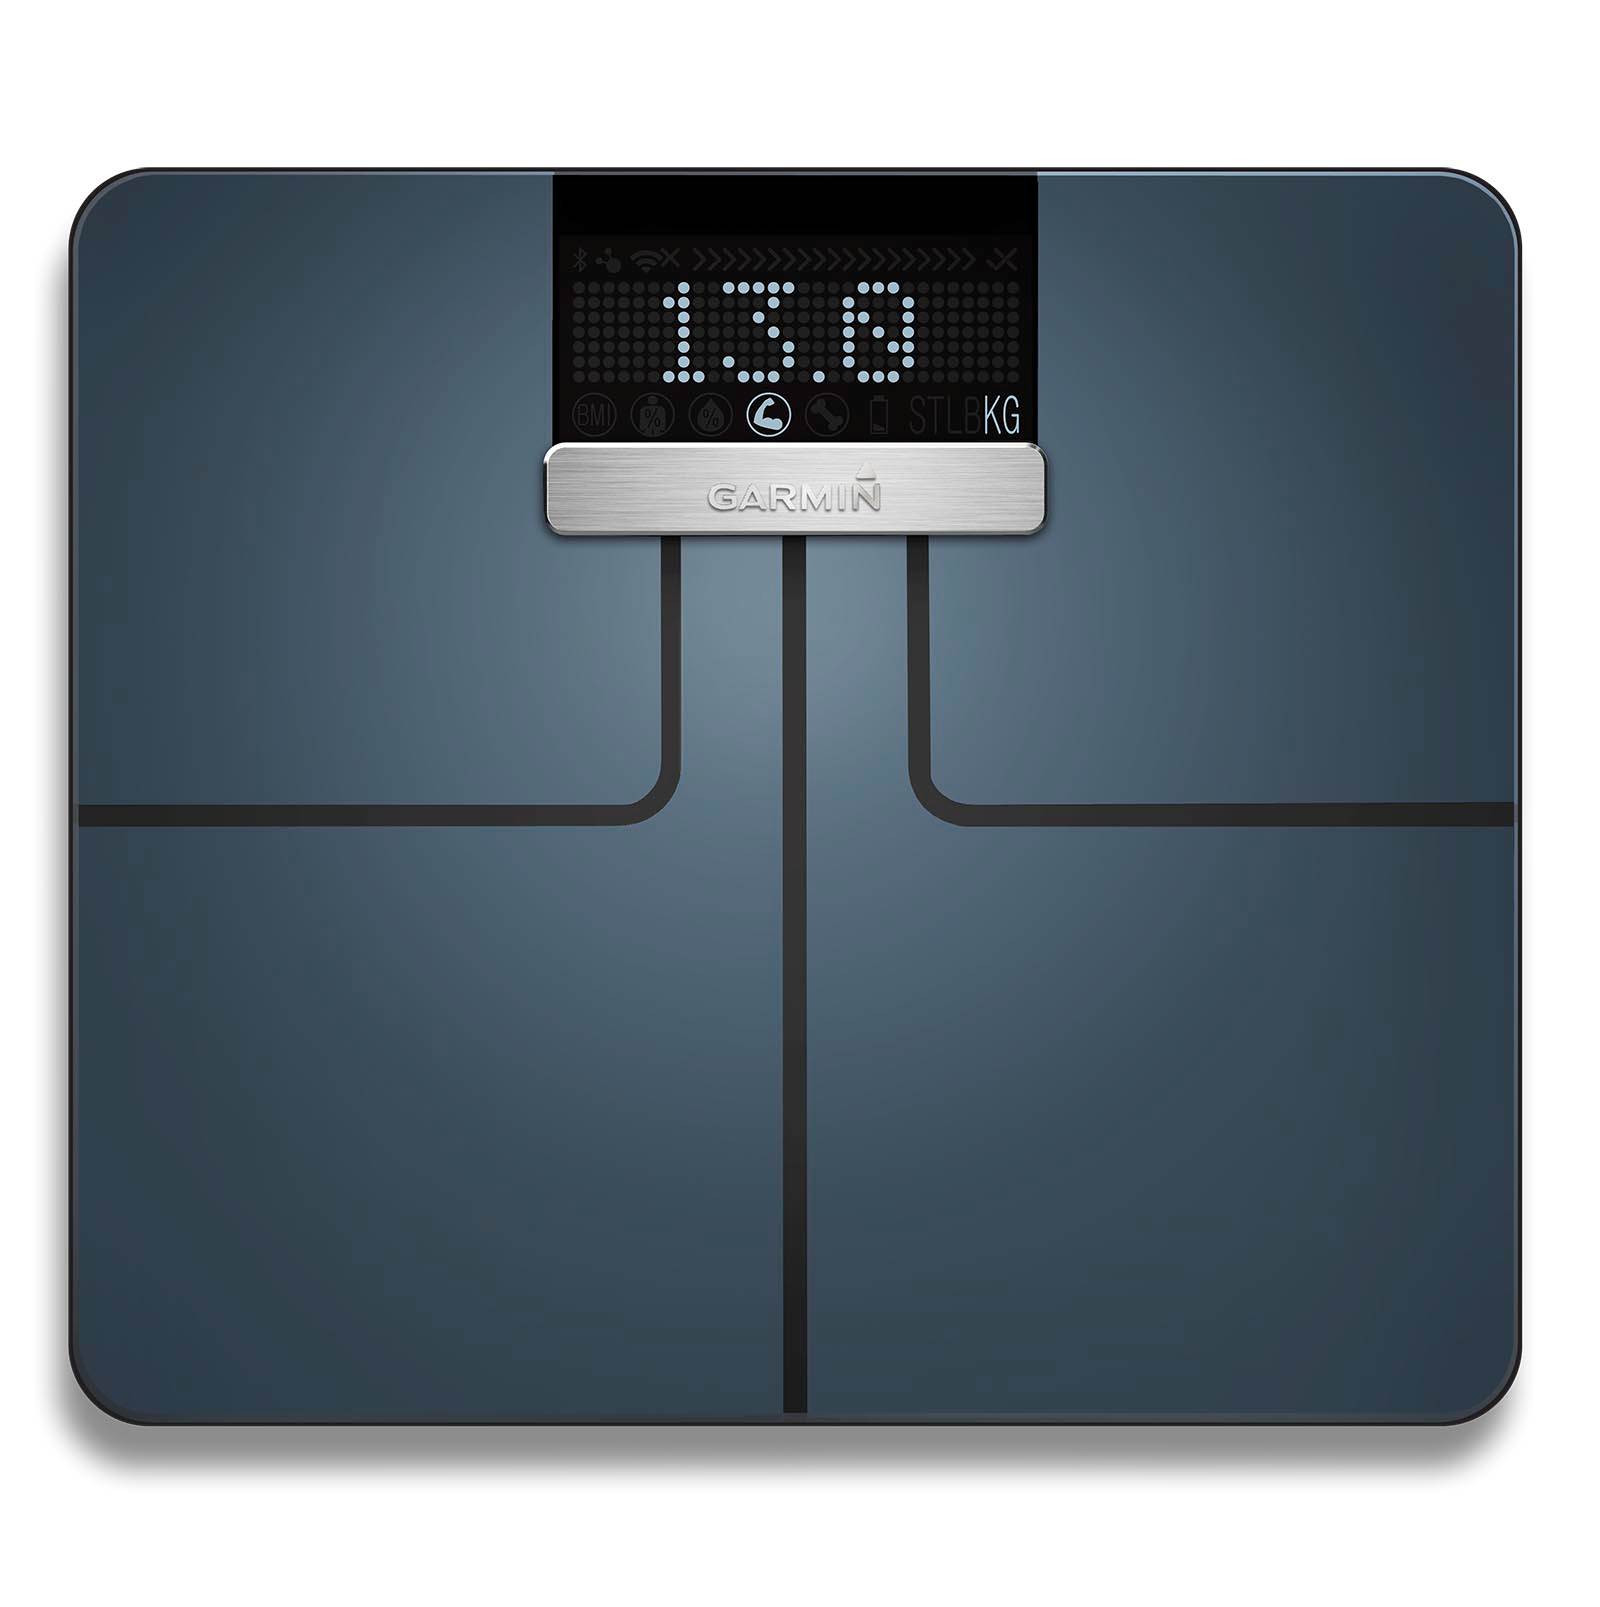 Garmin Index Smart WiFi Bluetooth BMI Calculator Digital Weight Scale, Black - image 3 of 9